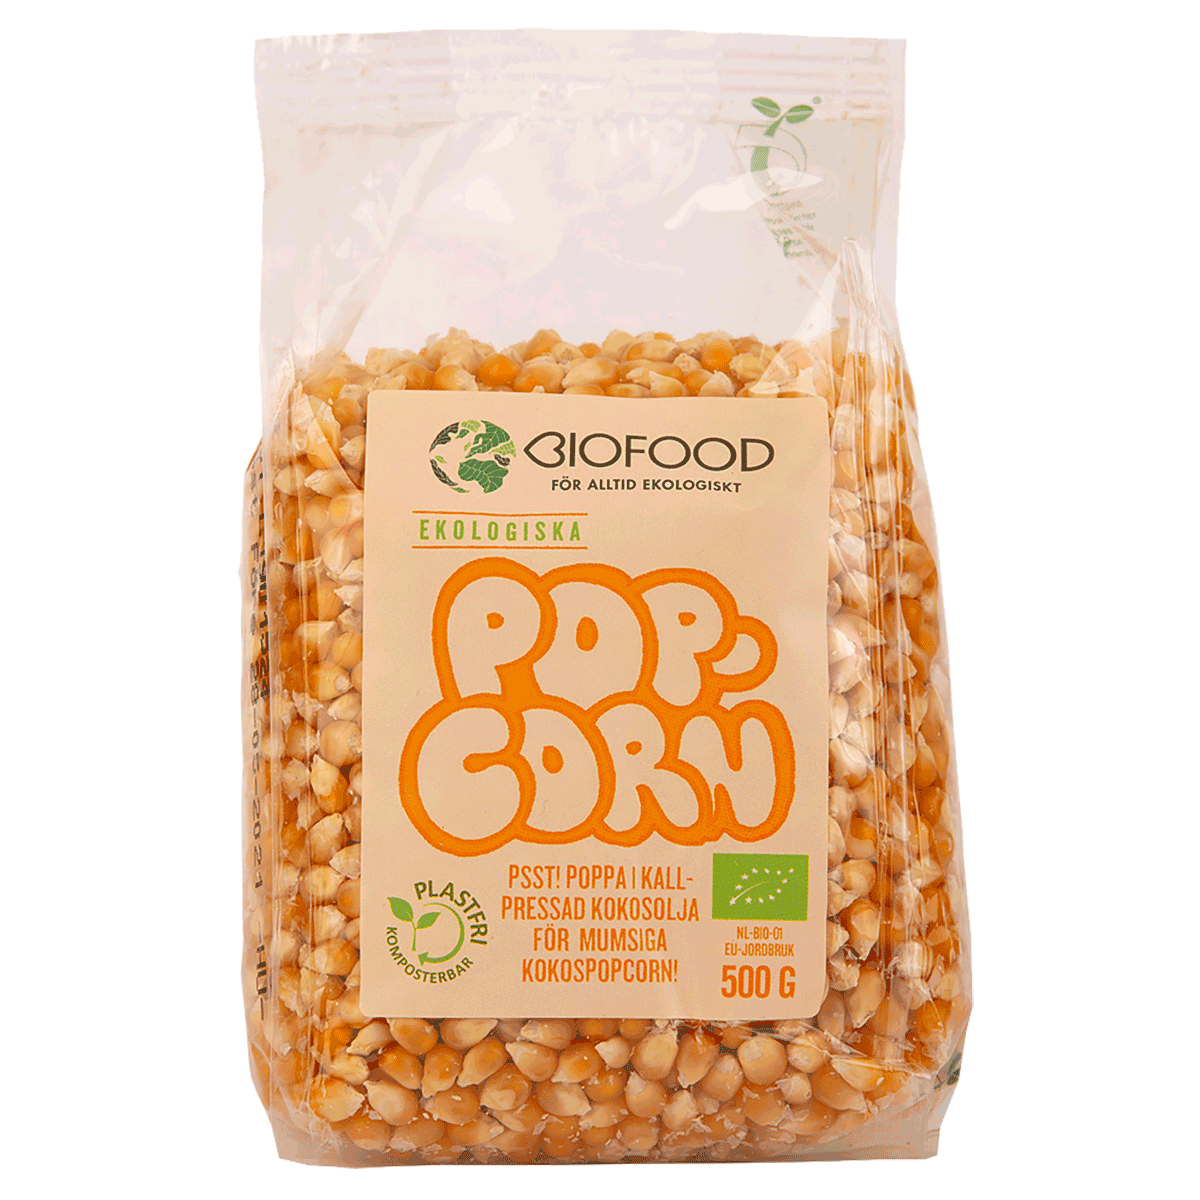 Popcorn from Biofood